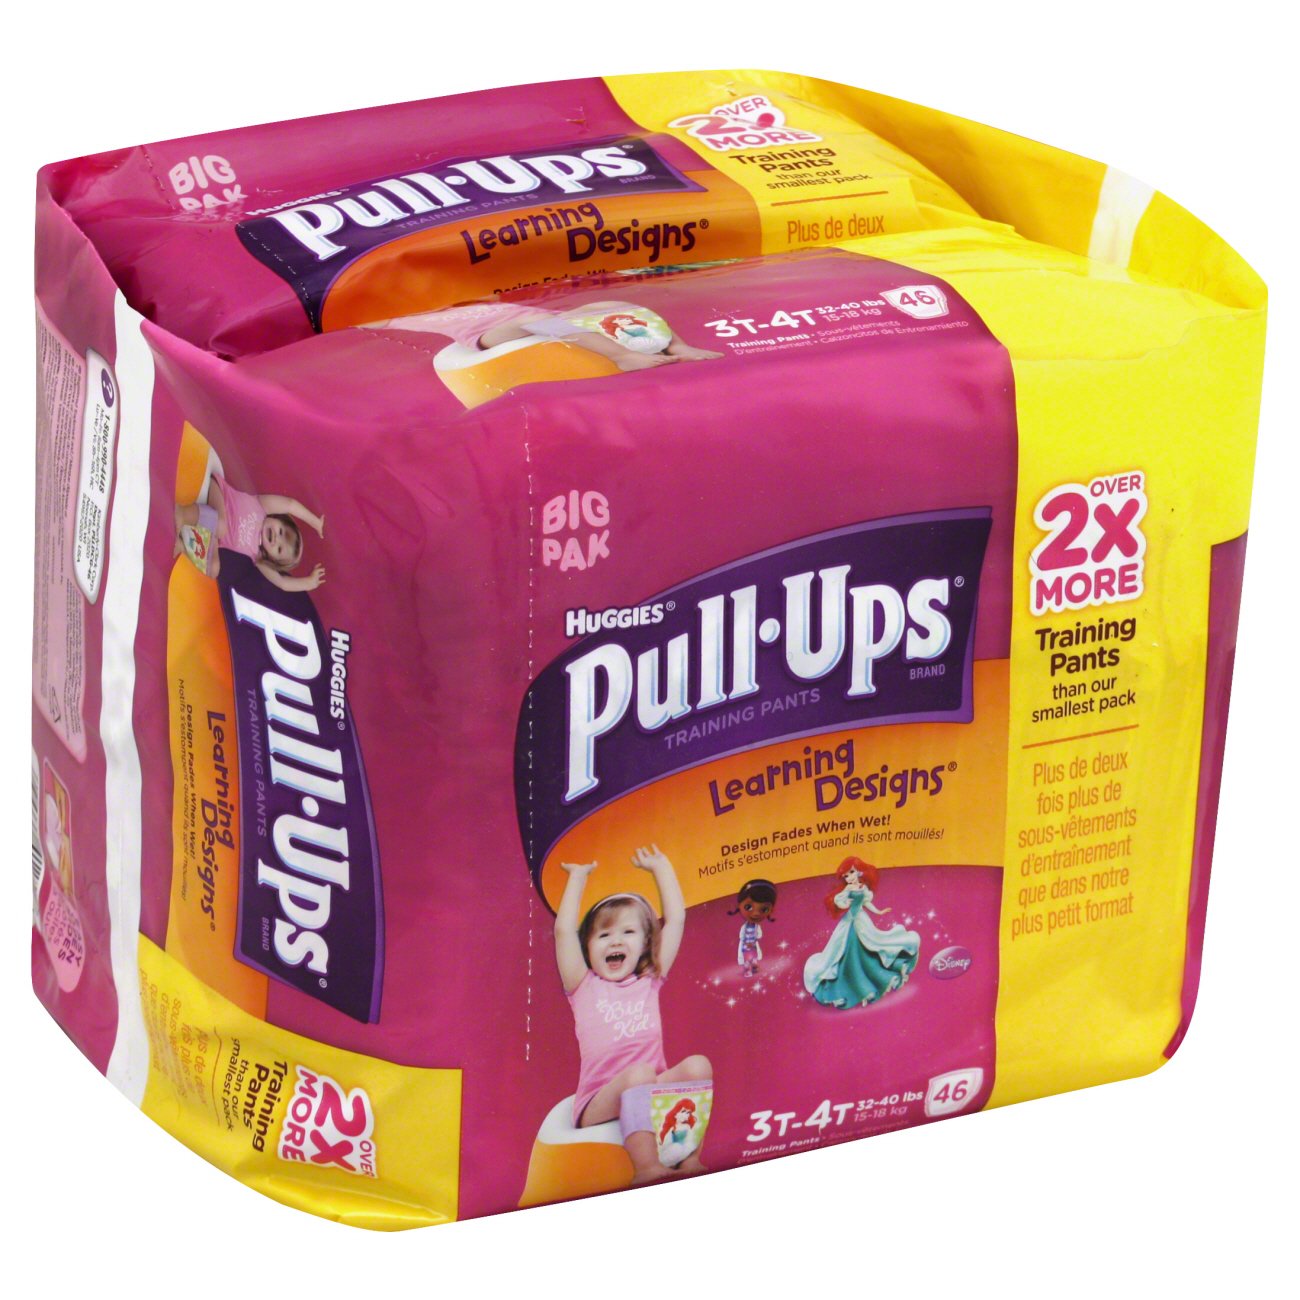 Pull-ups Learning Designs For Girls Female Toddler Training Pants